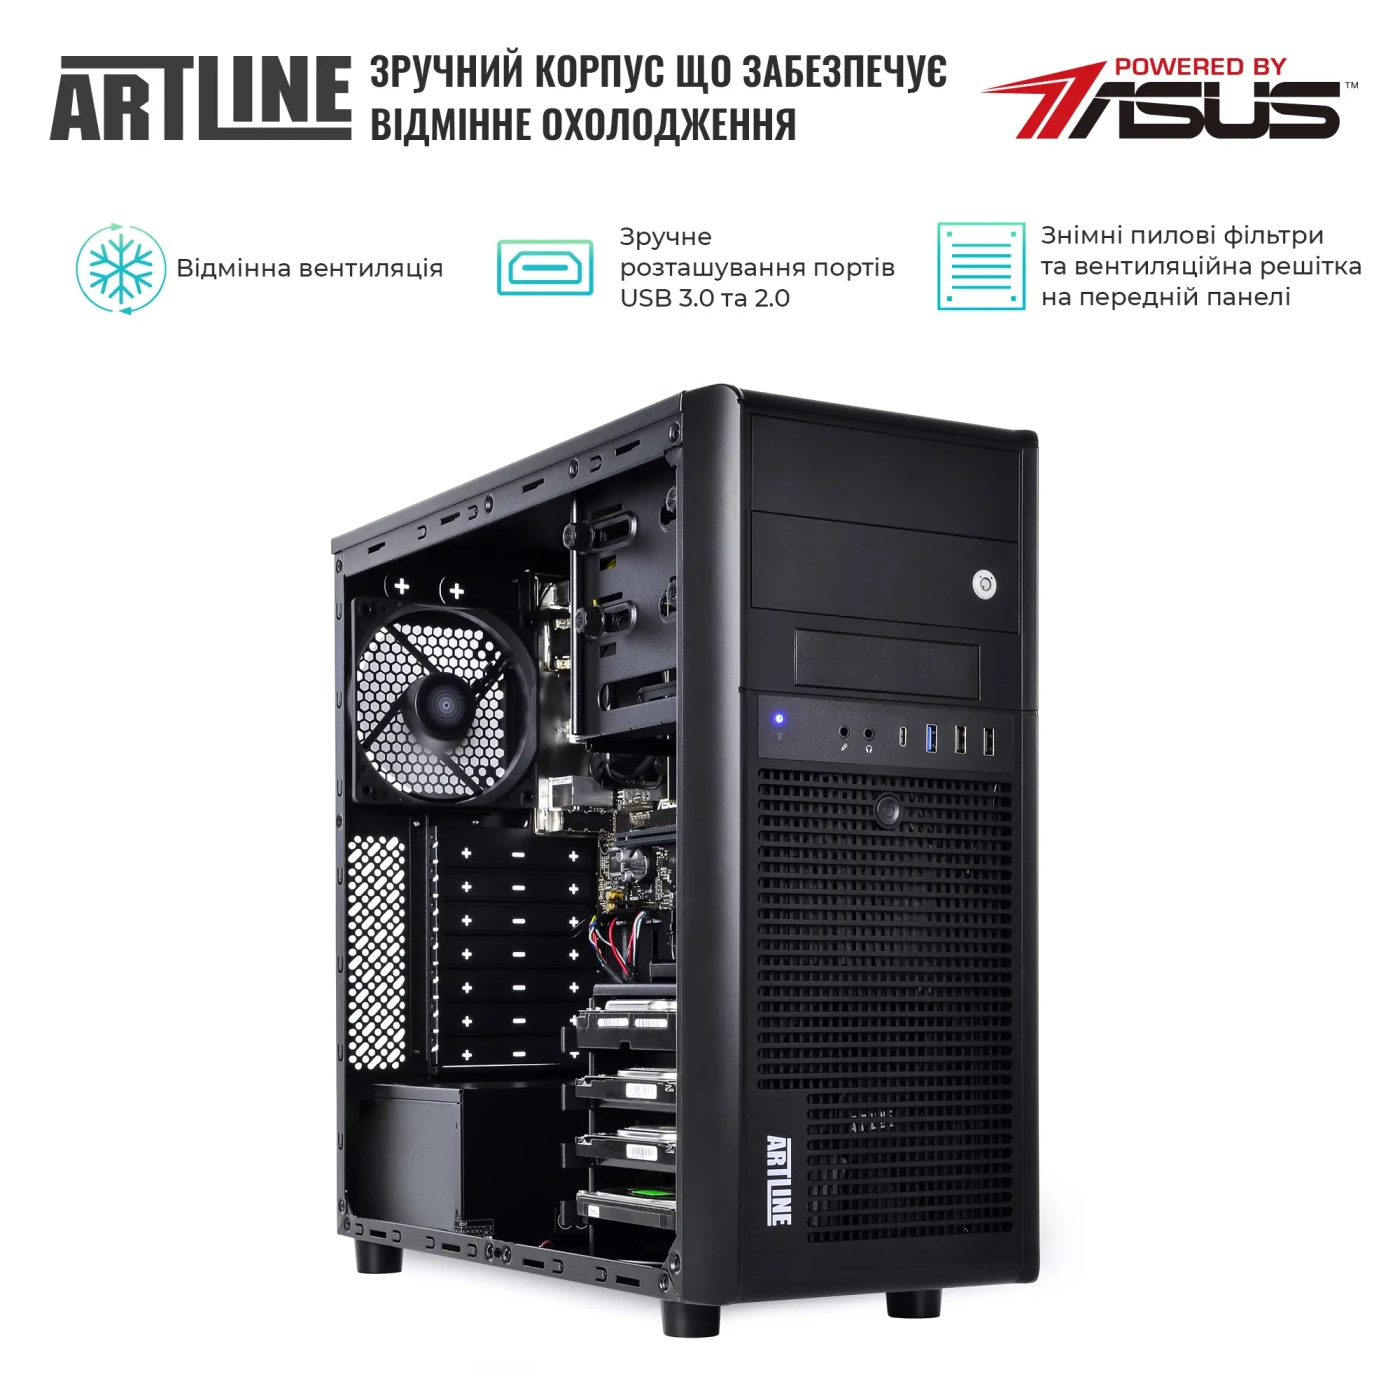 Купити Сервер ARTLINE Business T35v30 - фото 3